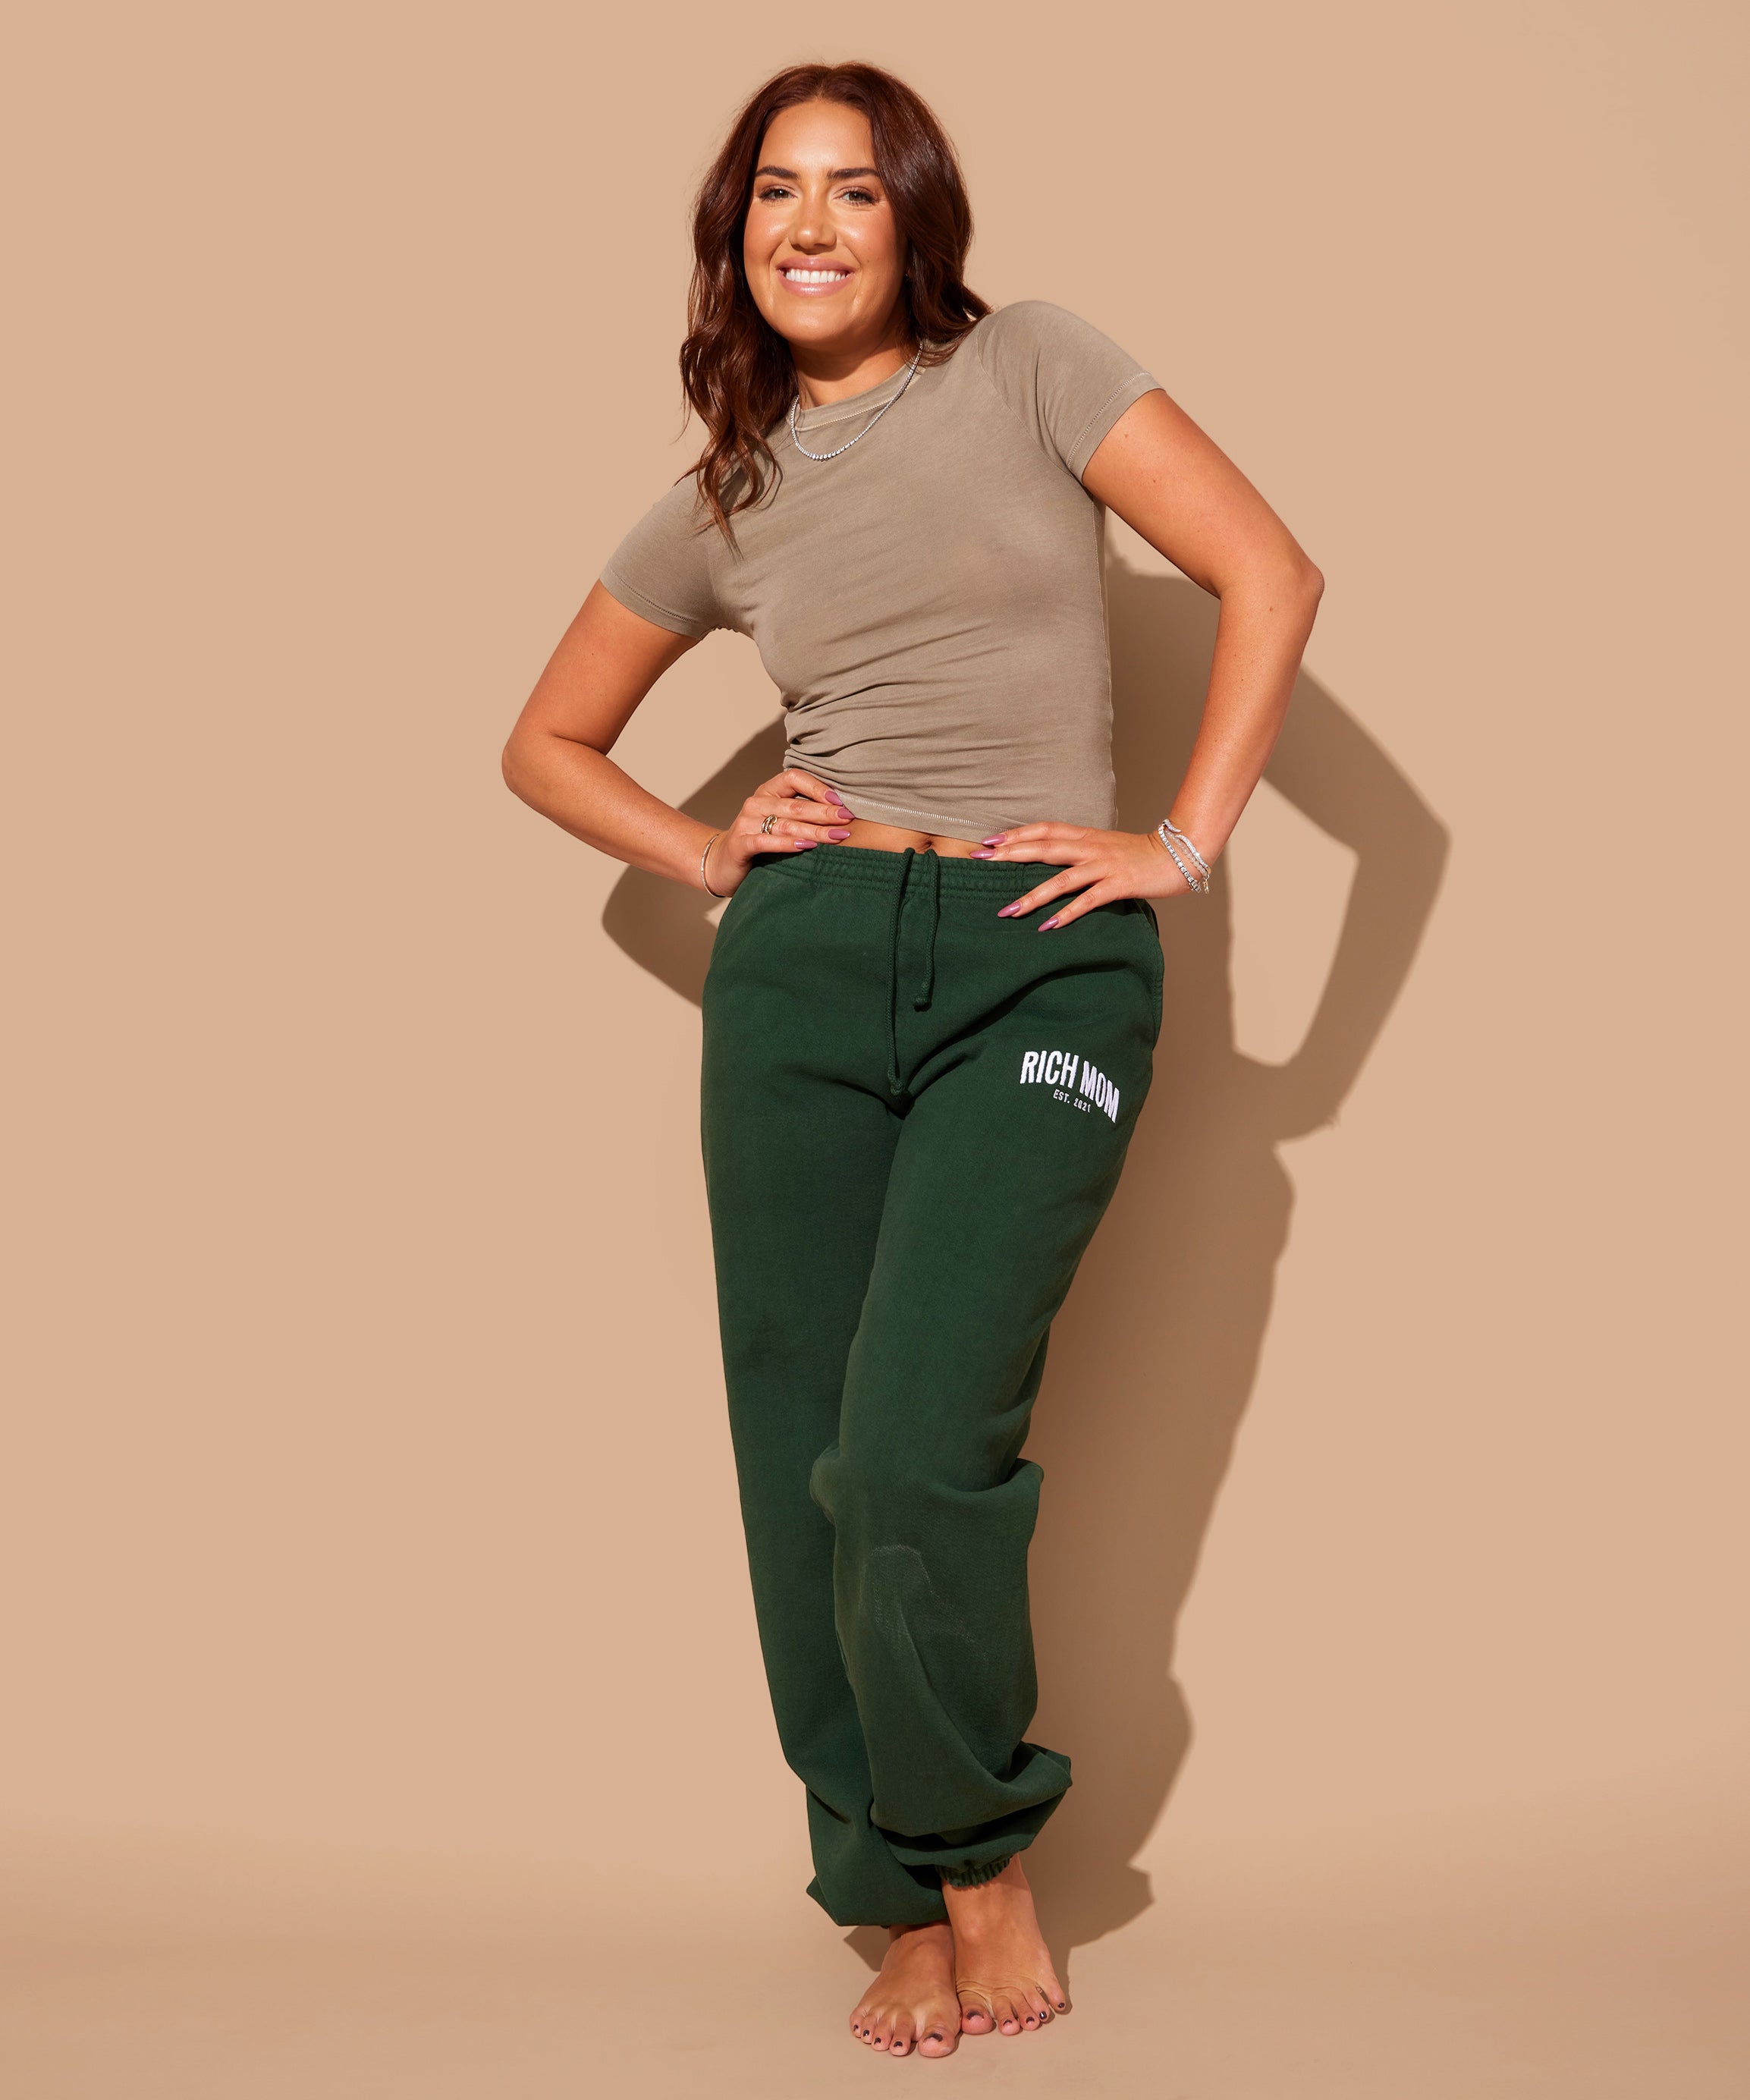 Tinx wears Rich Mom Gear: Essentials Sweatpants in Money Green